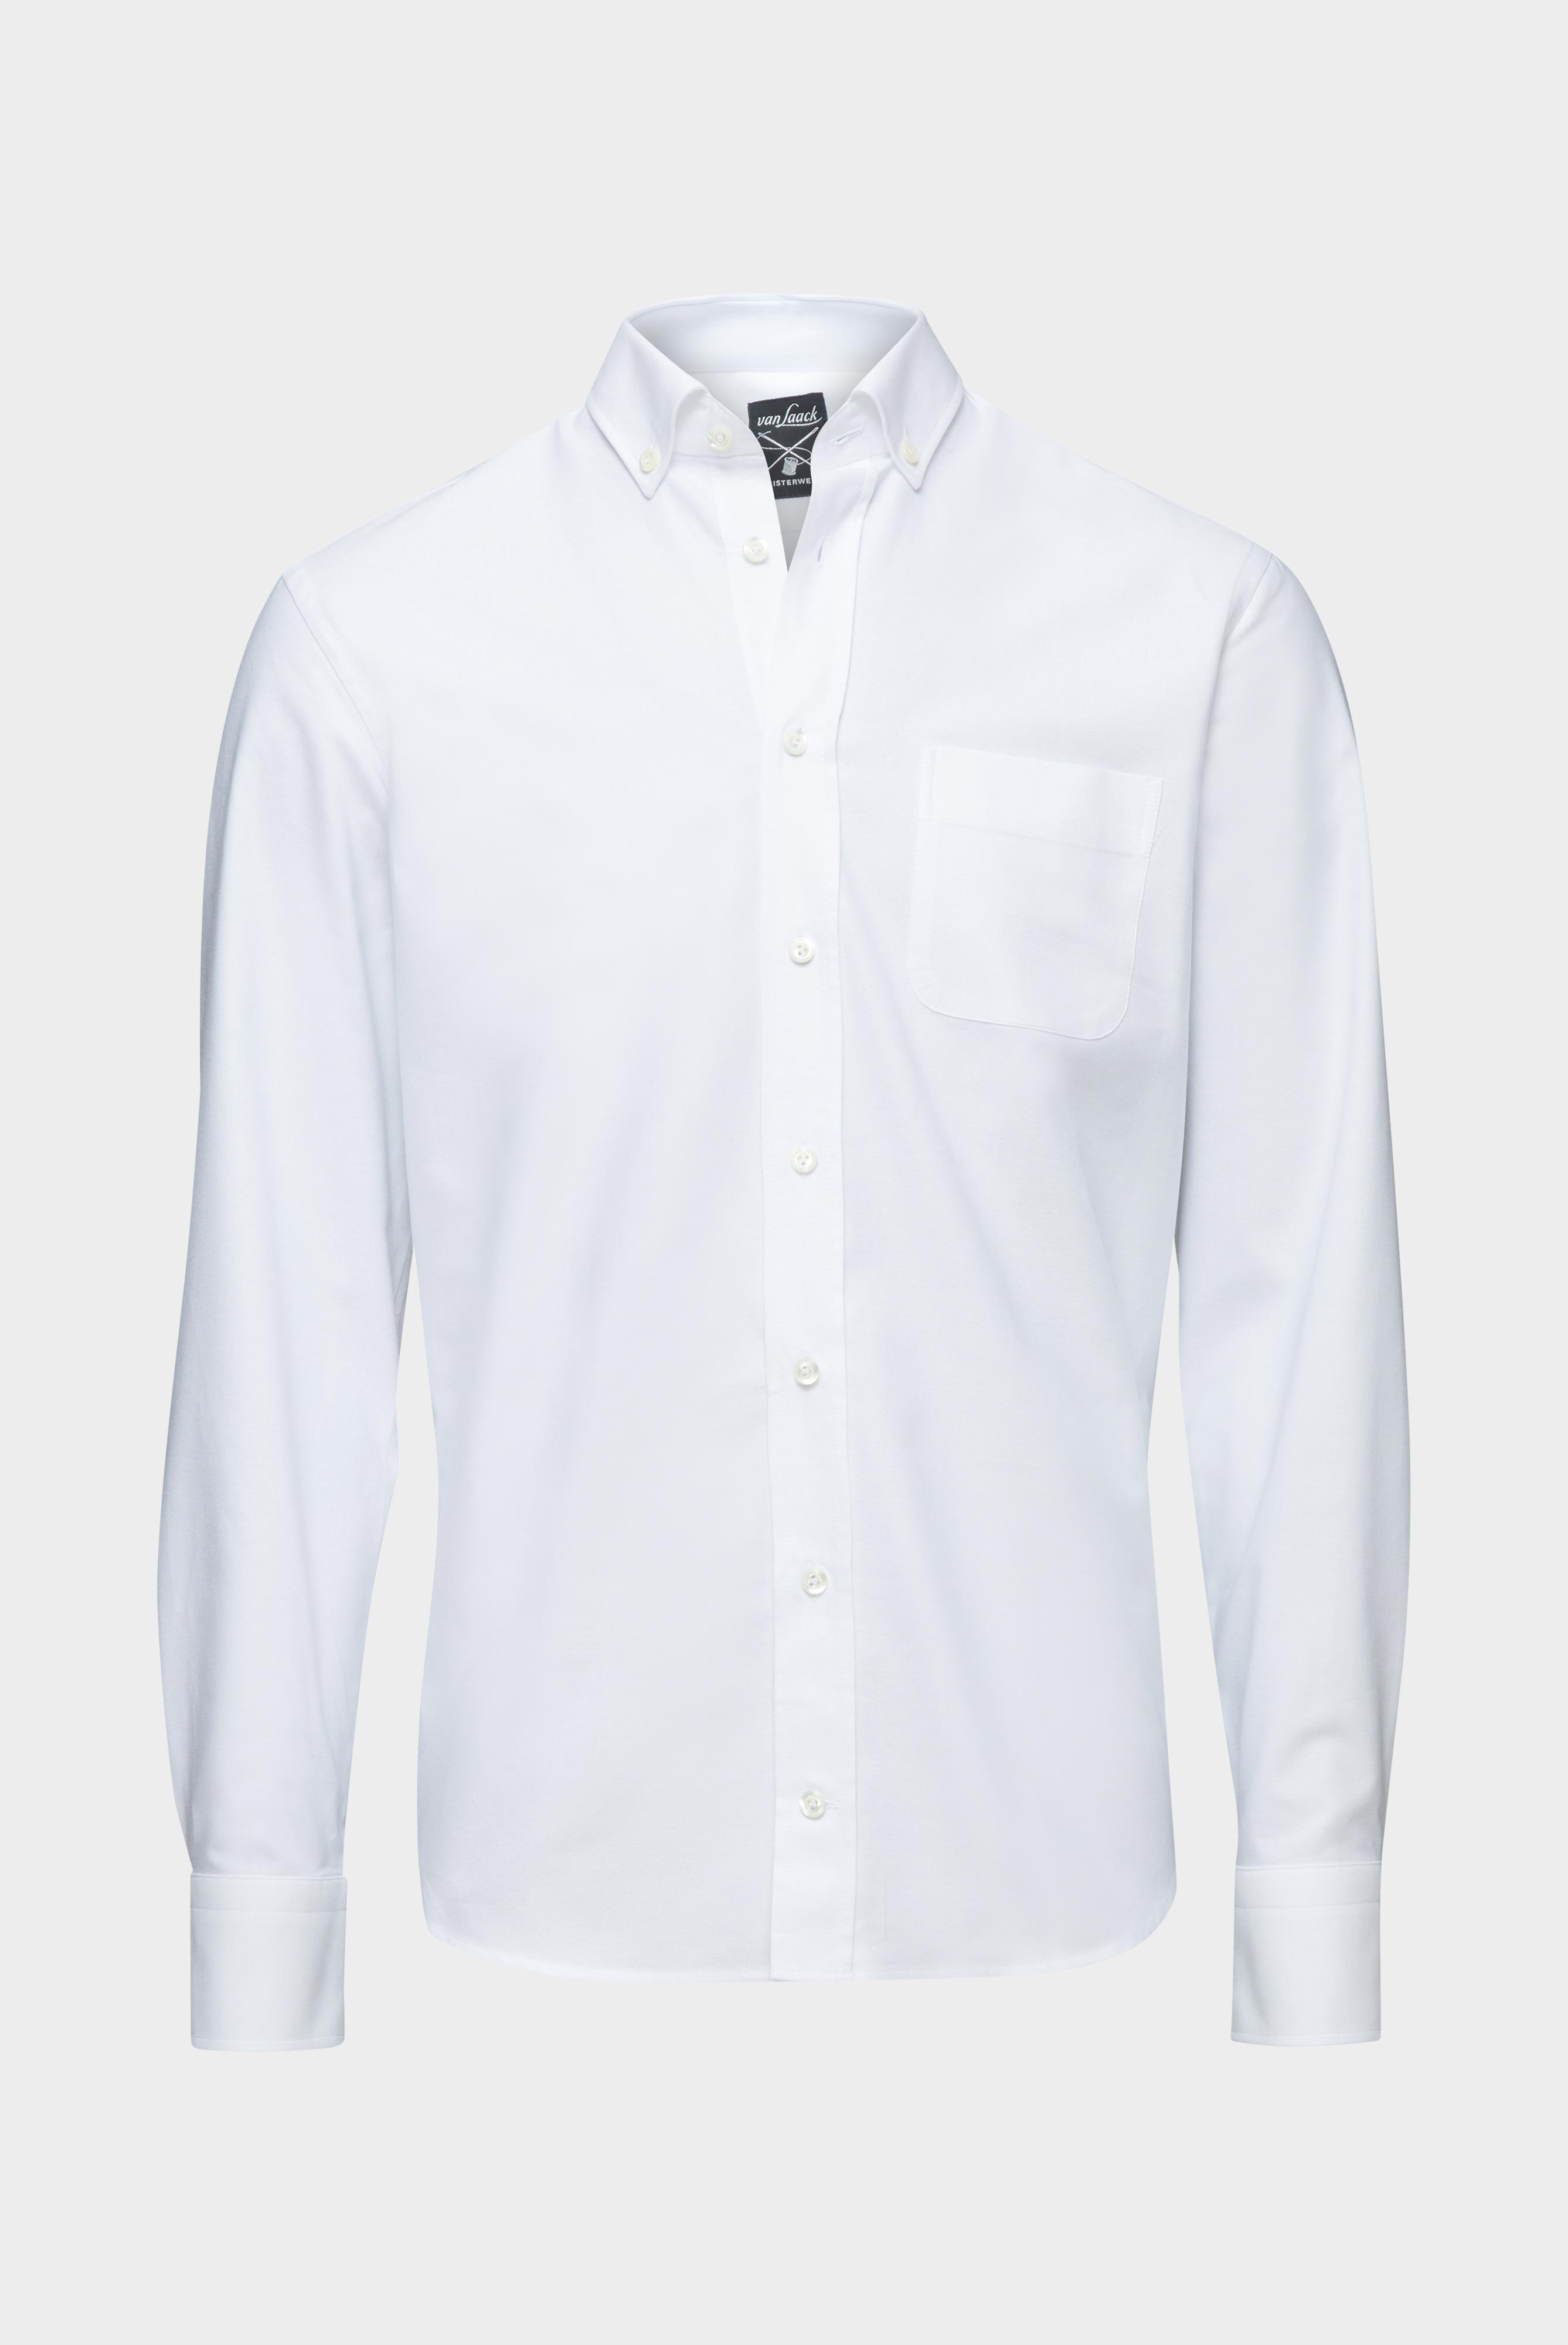 Easy Iron Shirts+Oxford Shirt Tailor Fit+20.2013.AV.161267.000.37